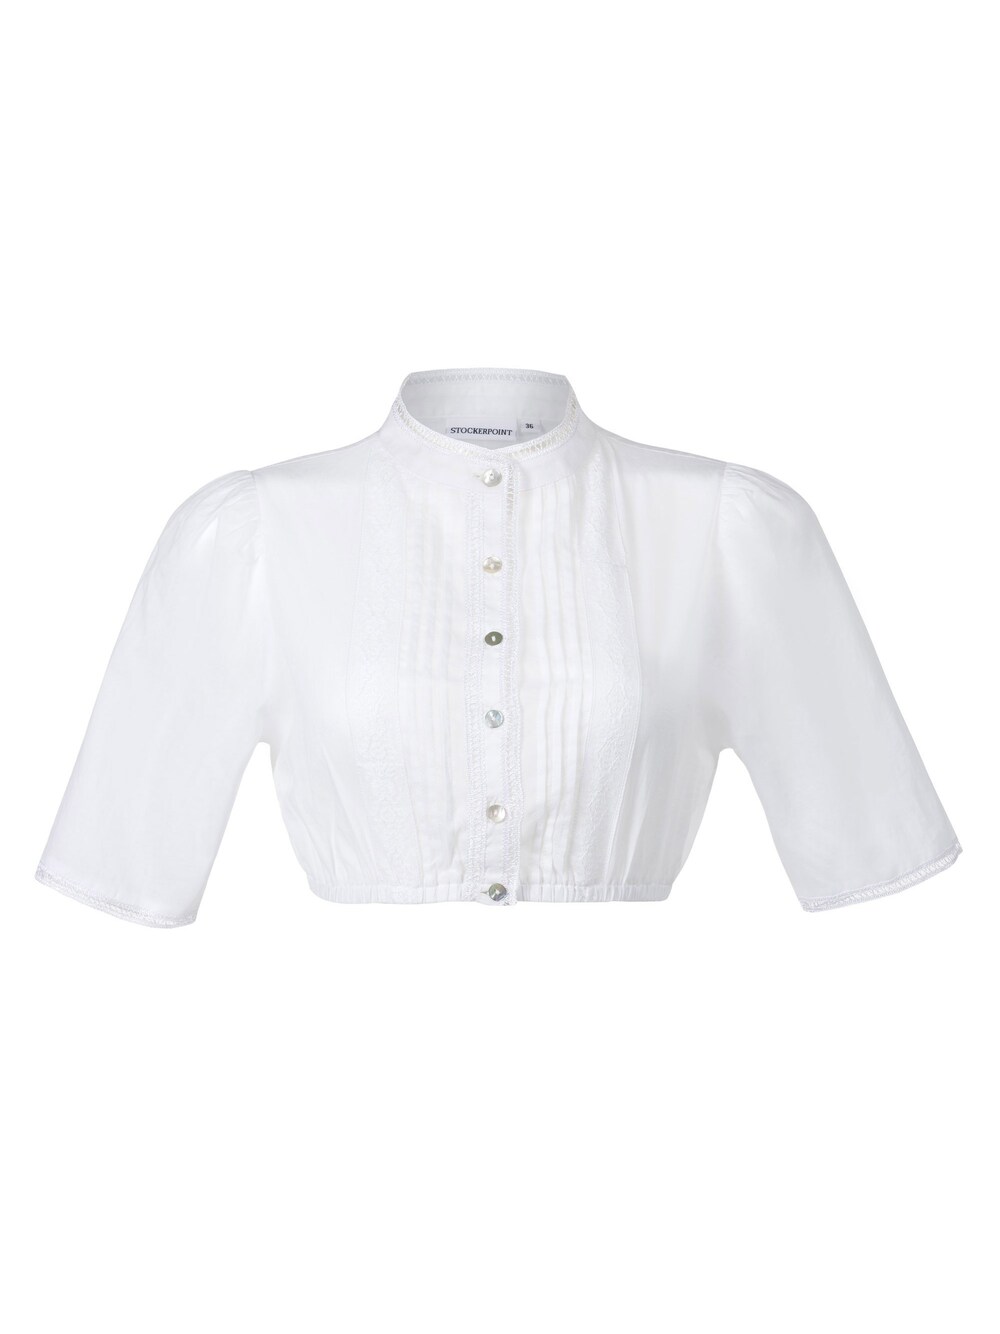 Традиционная блузка STOCKERPOINT B-7086, белый